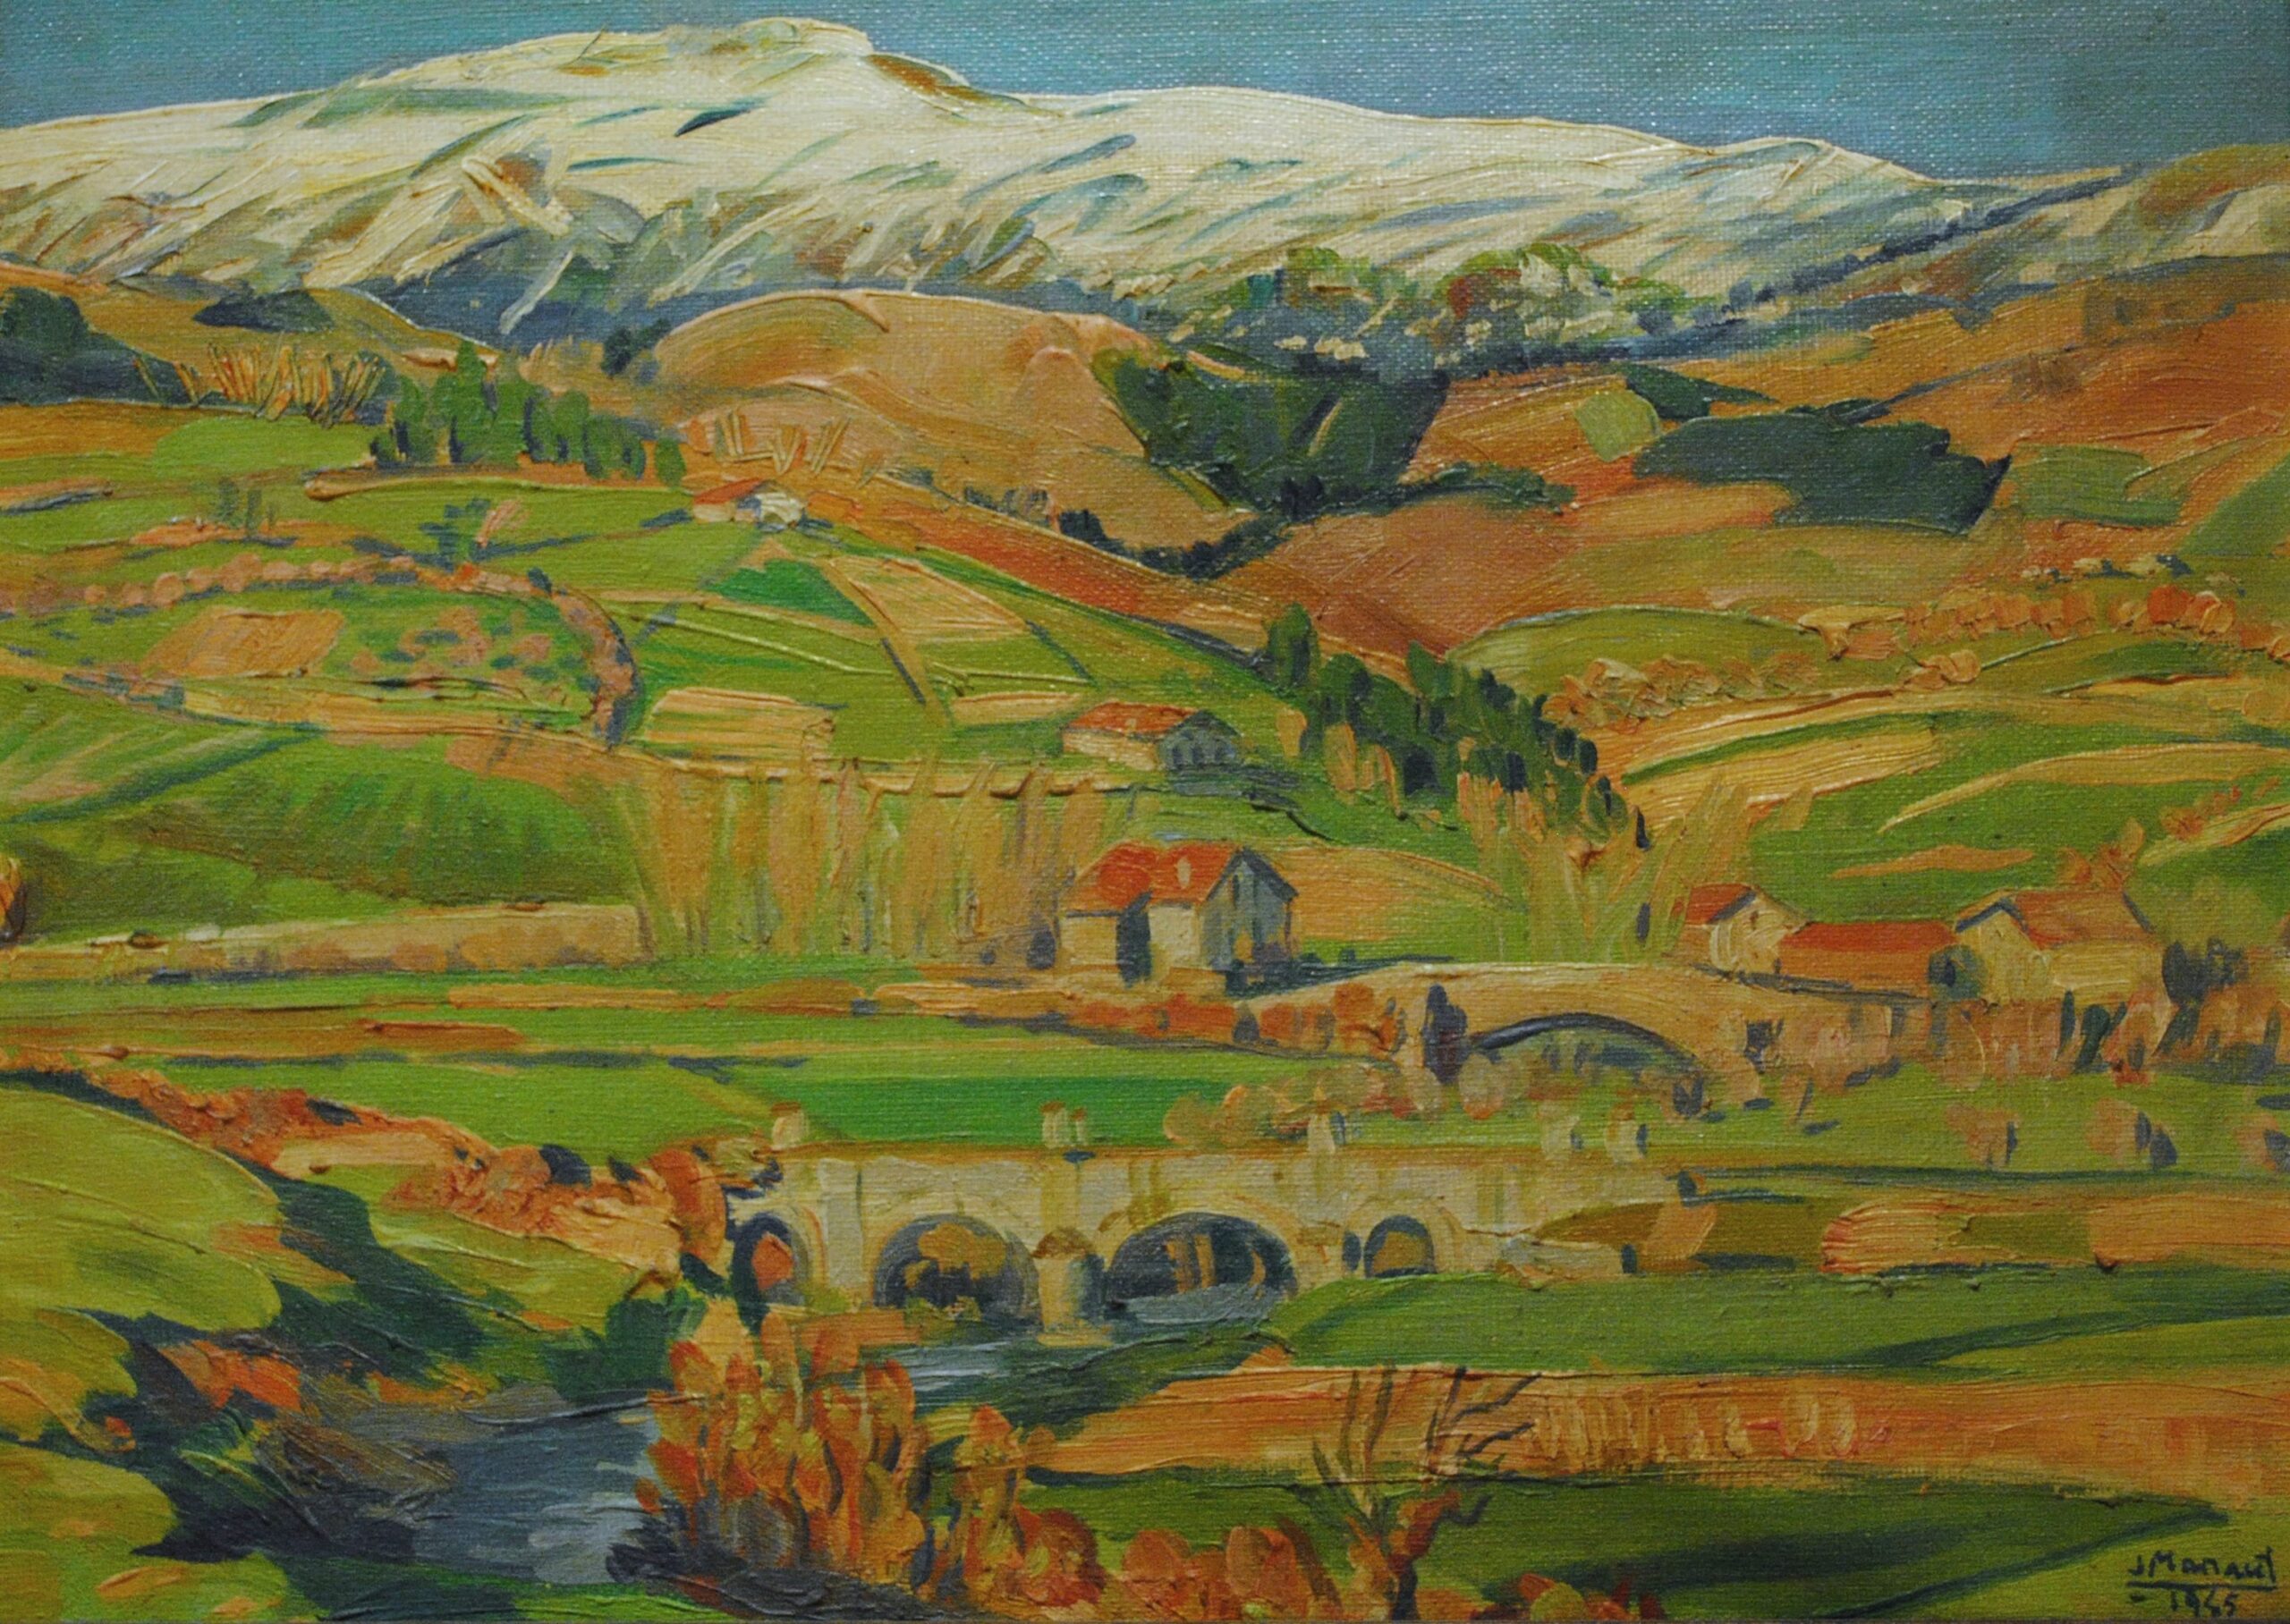 Pintura de José Manaut titulada Sierra de Guadarrama, Madrid, 1945. Óleo sobre lienzo.